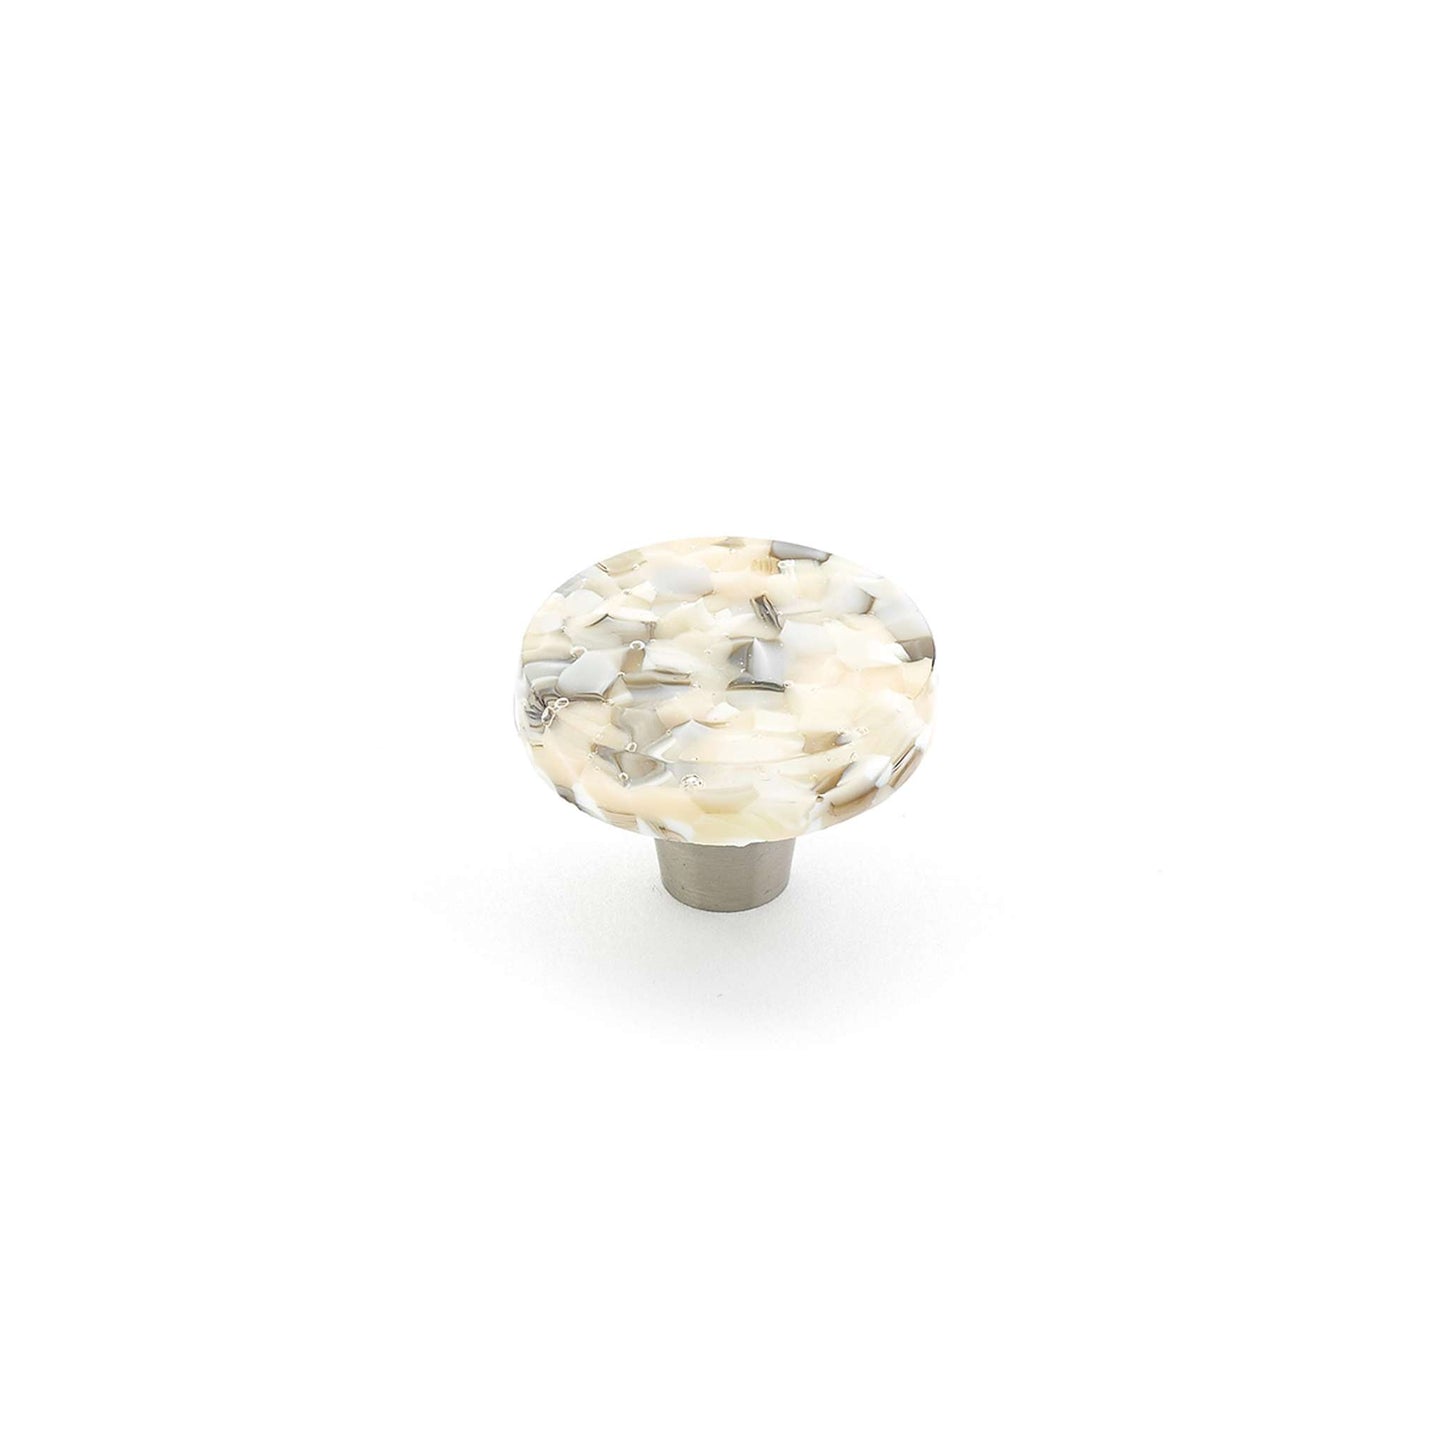 Schaub and Company - Ice Cabinet Knob Round Sable Pebbles